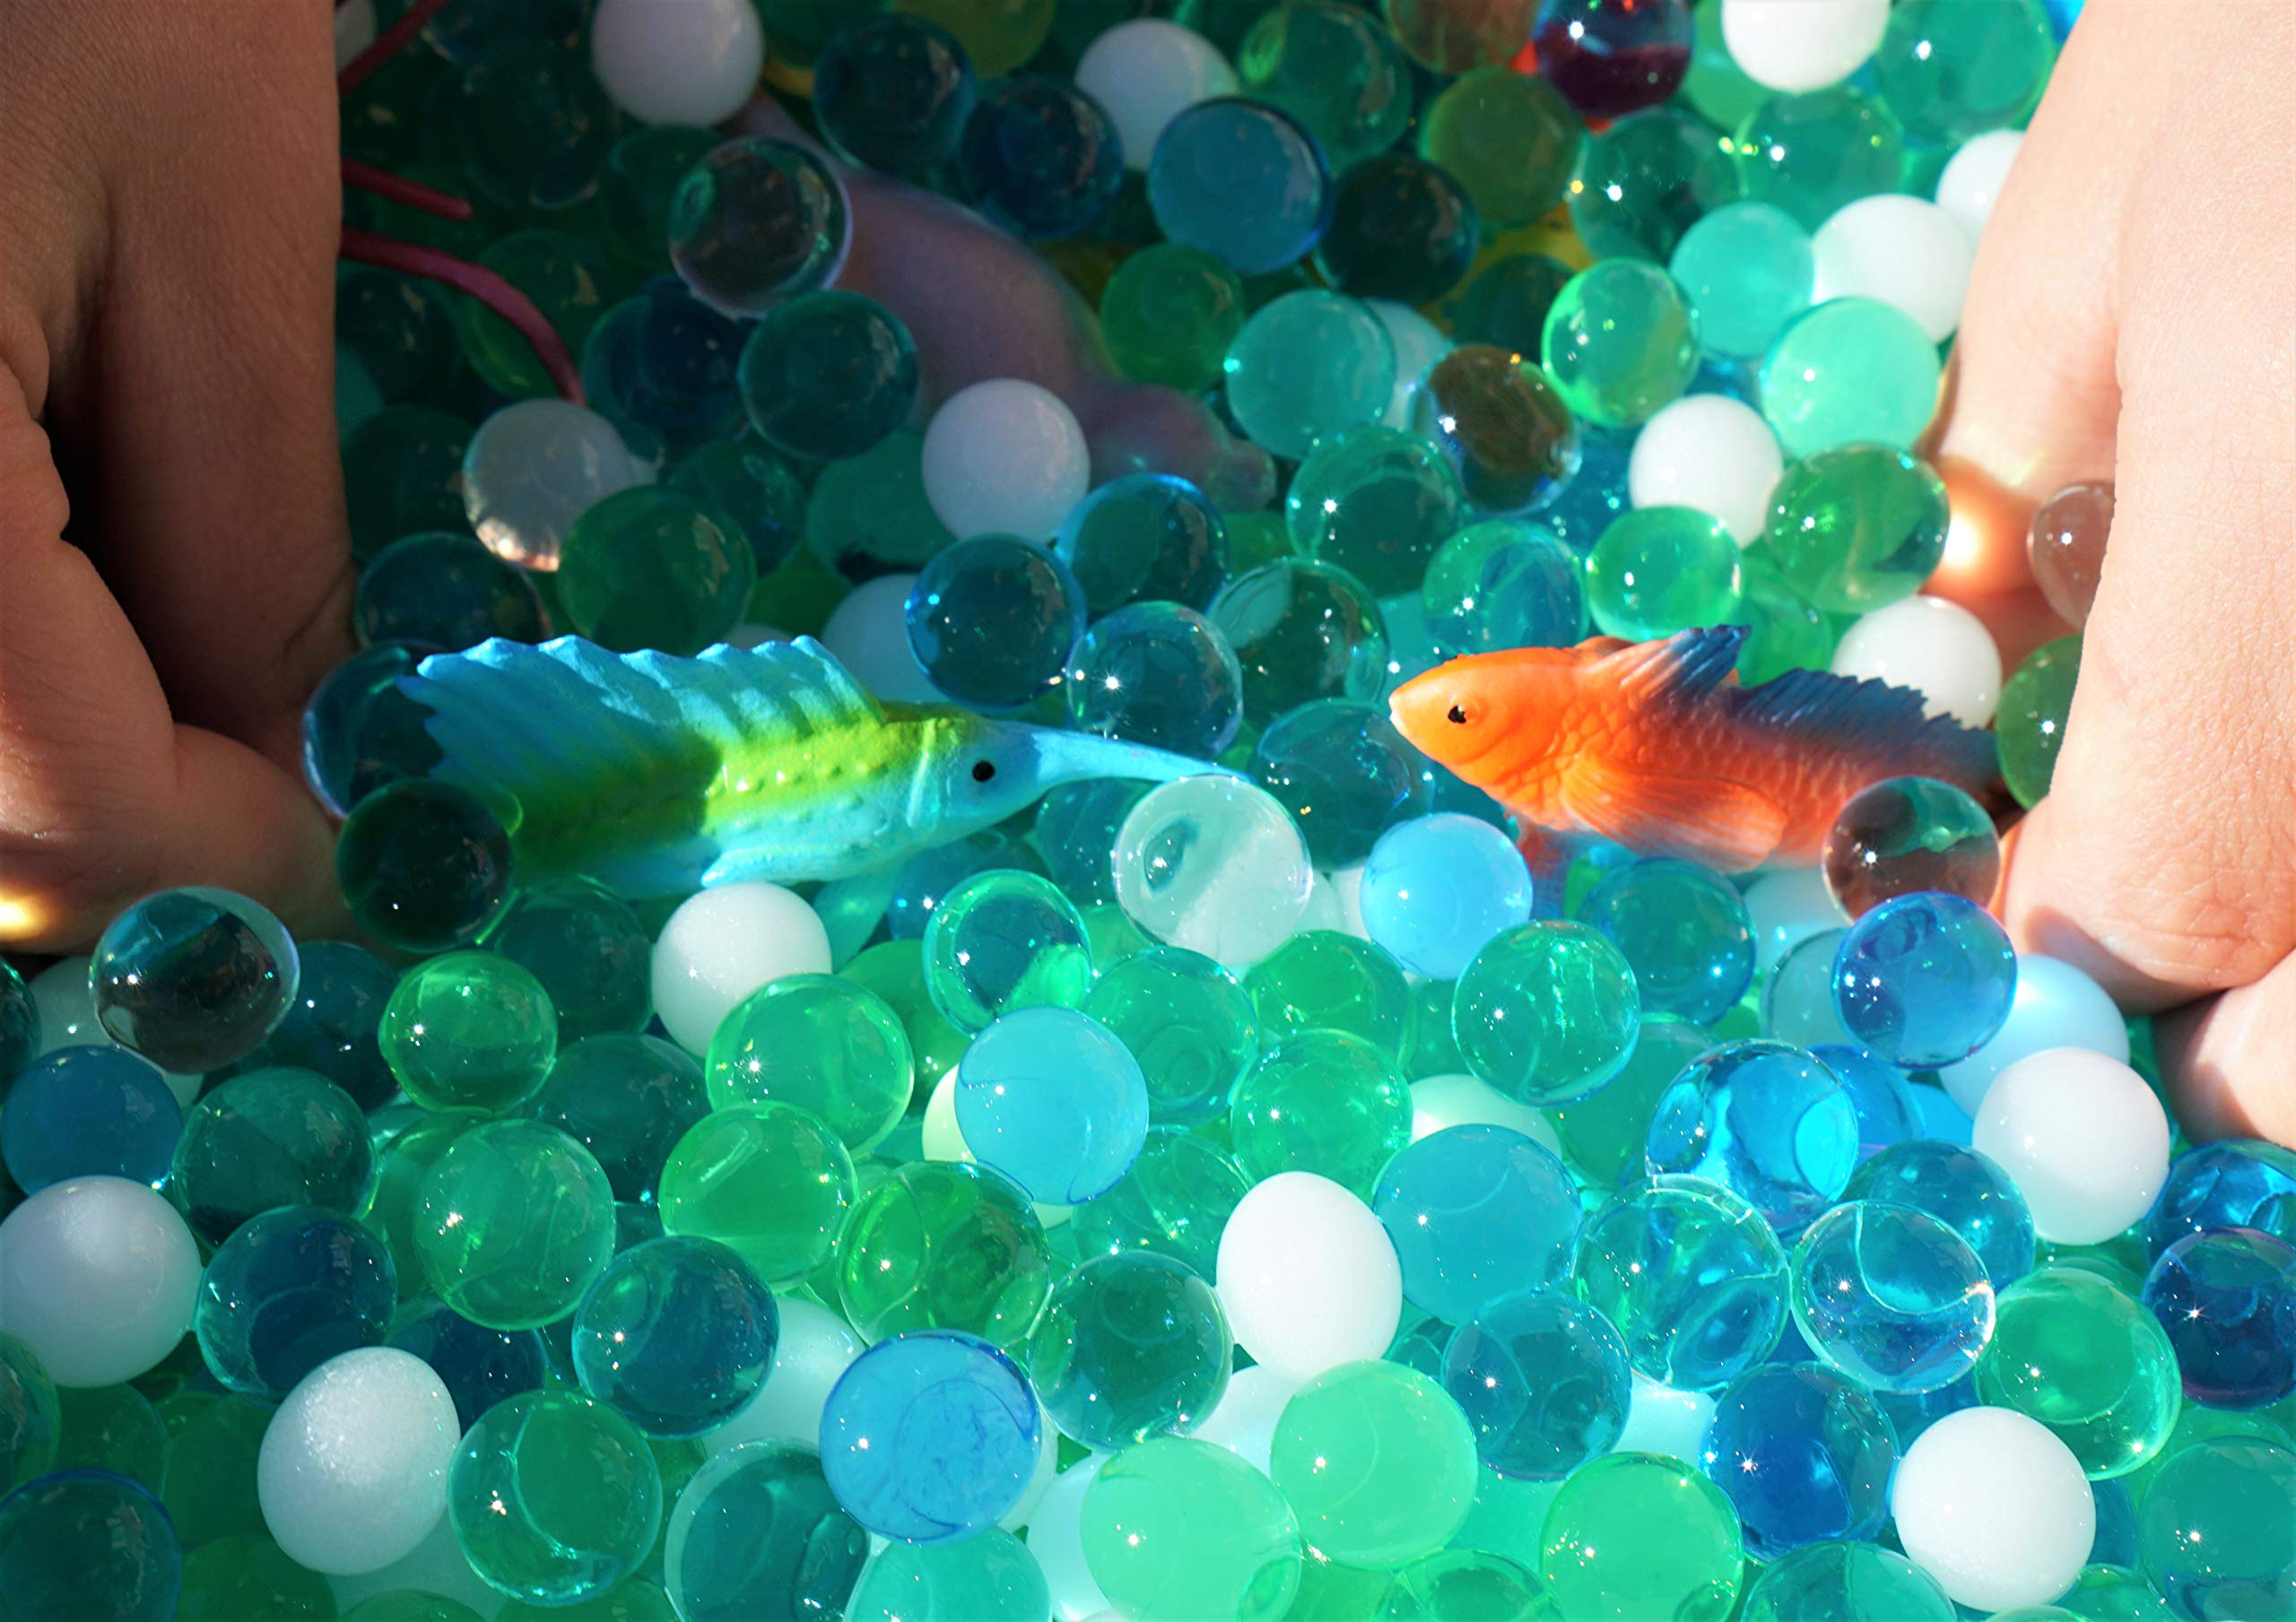 SENSORY4U Dew Drops Water Beads Ocean Explorers Tactile Sensory Kit - 26 Sea Animal Creatures Included - Great Fine Motor Skills Toy for Kids